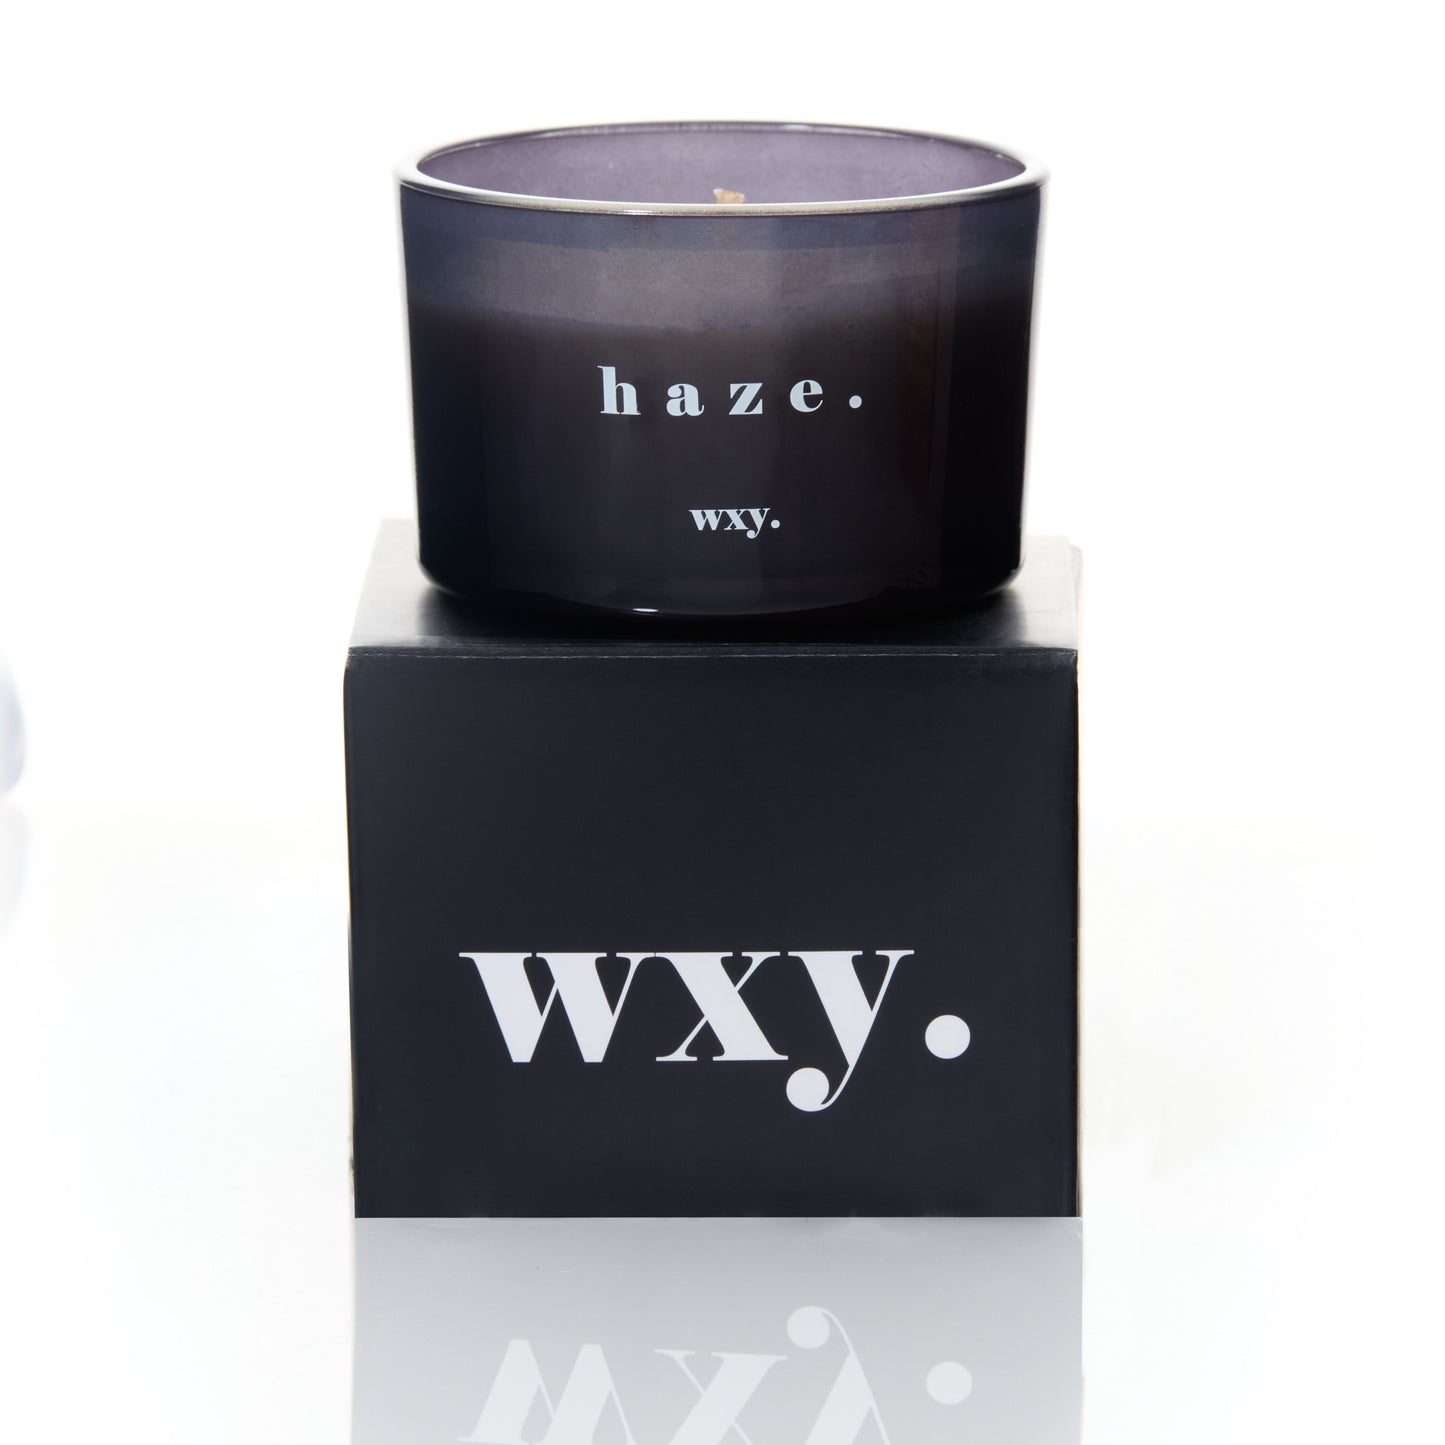 WXY Candles - Haze